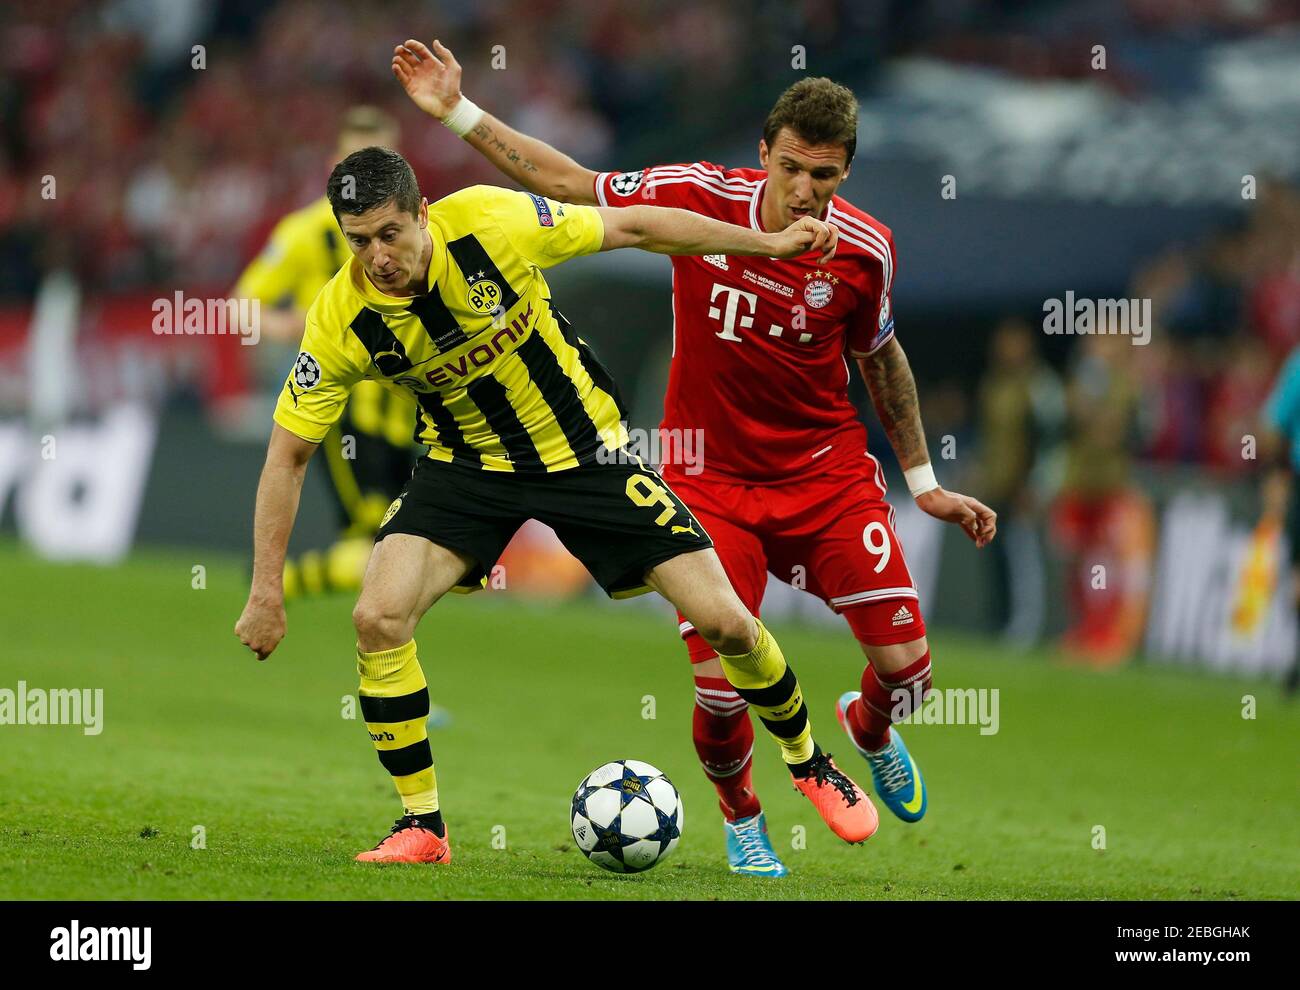 Programm Supercup 2013 Borussia Dortmund Bayern München 